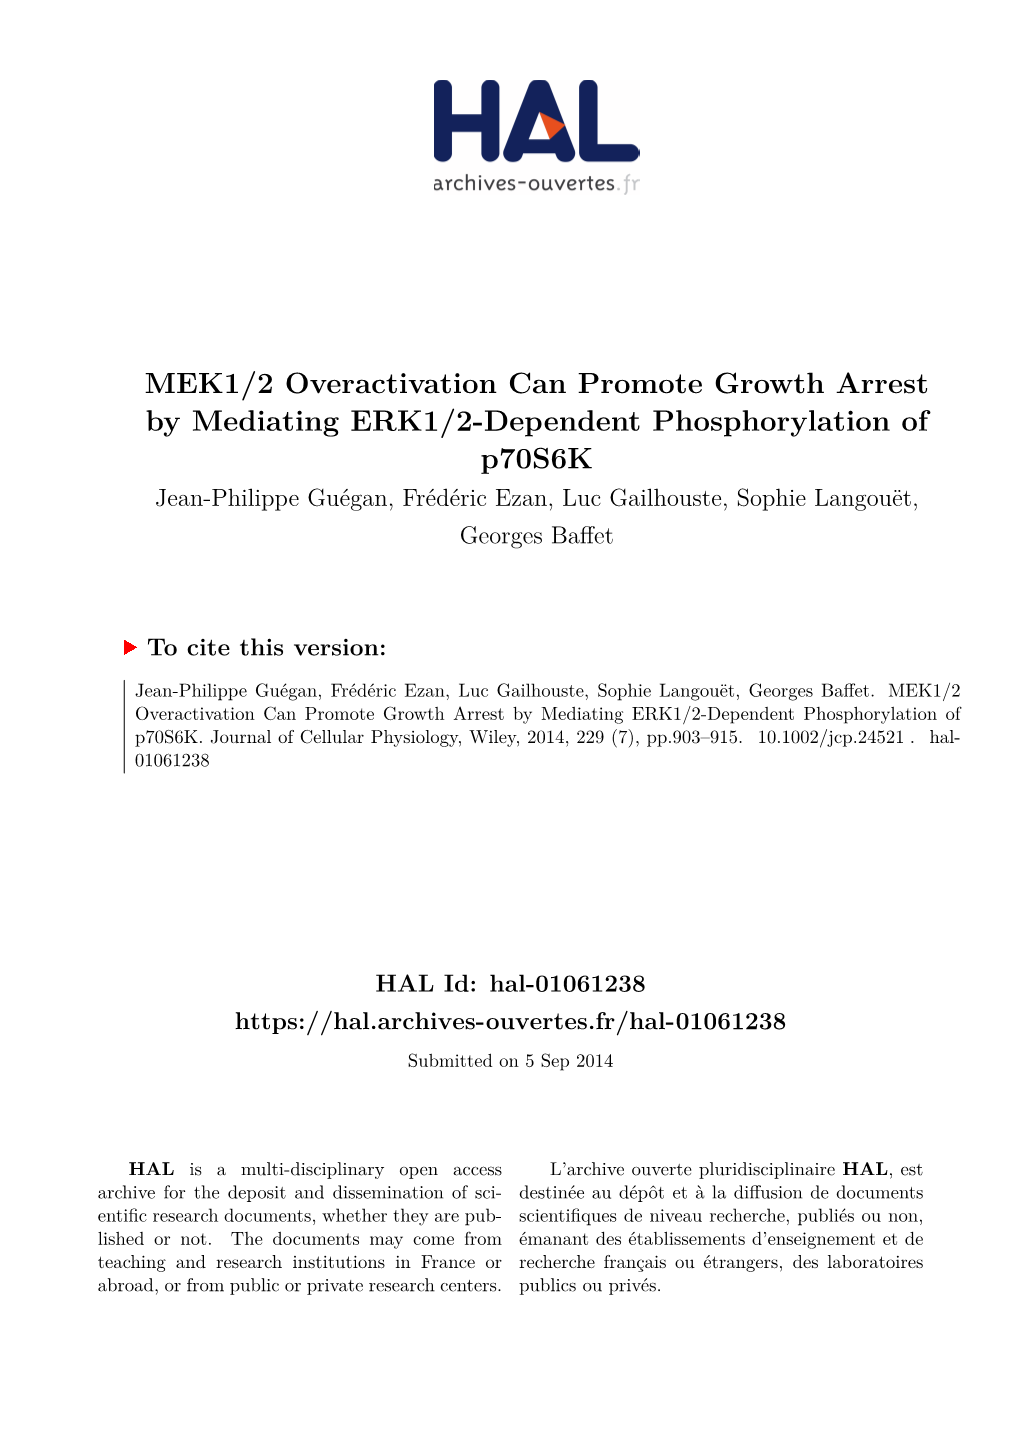 MEK1/2 Overactivation Can Promote Growth Arrest by Mediating ERK1/2